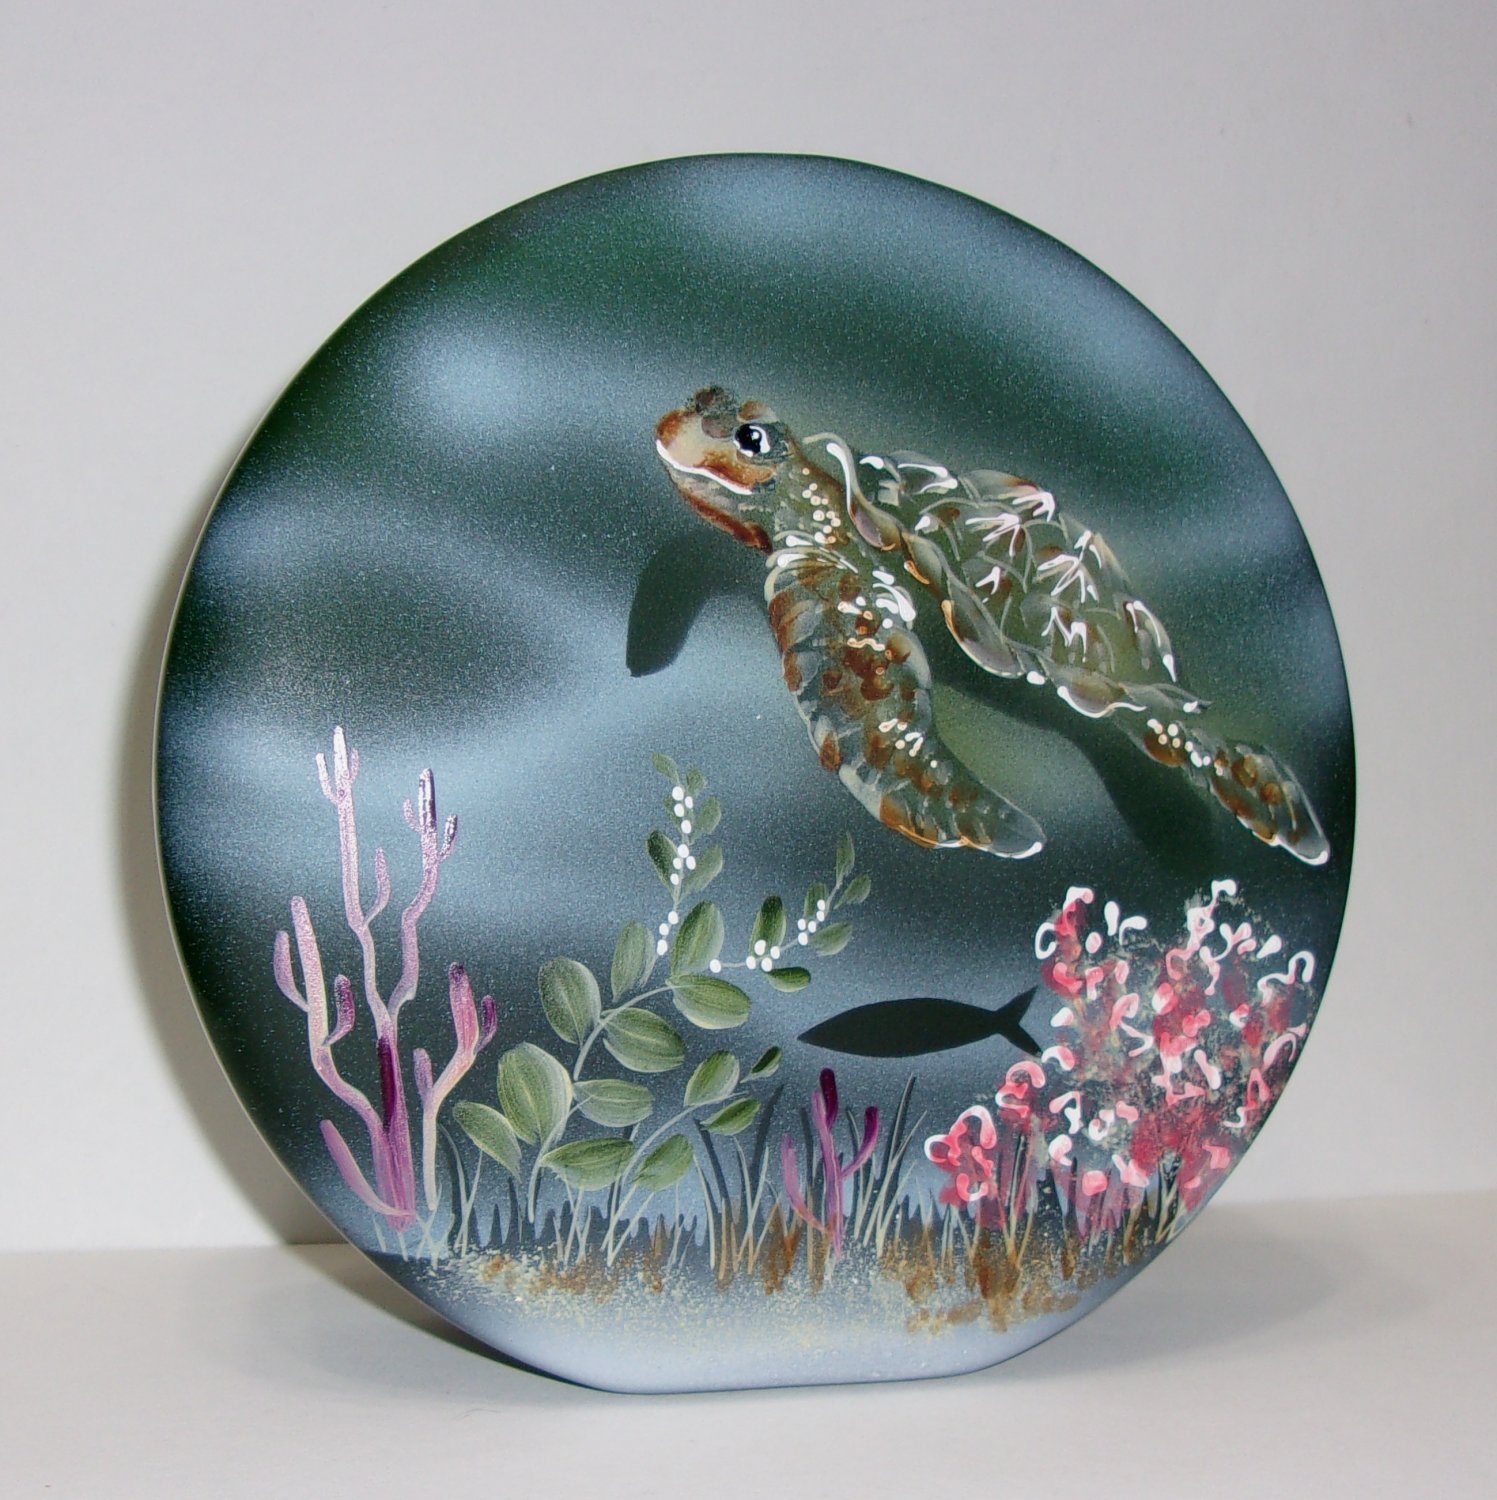 Fenton Glass Green Sea Turtle Ocean Seascape Paperweight Ltd Ed Spindler 1 of 20